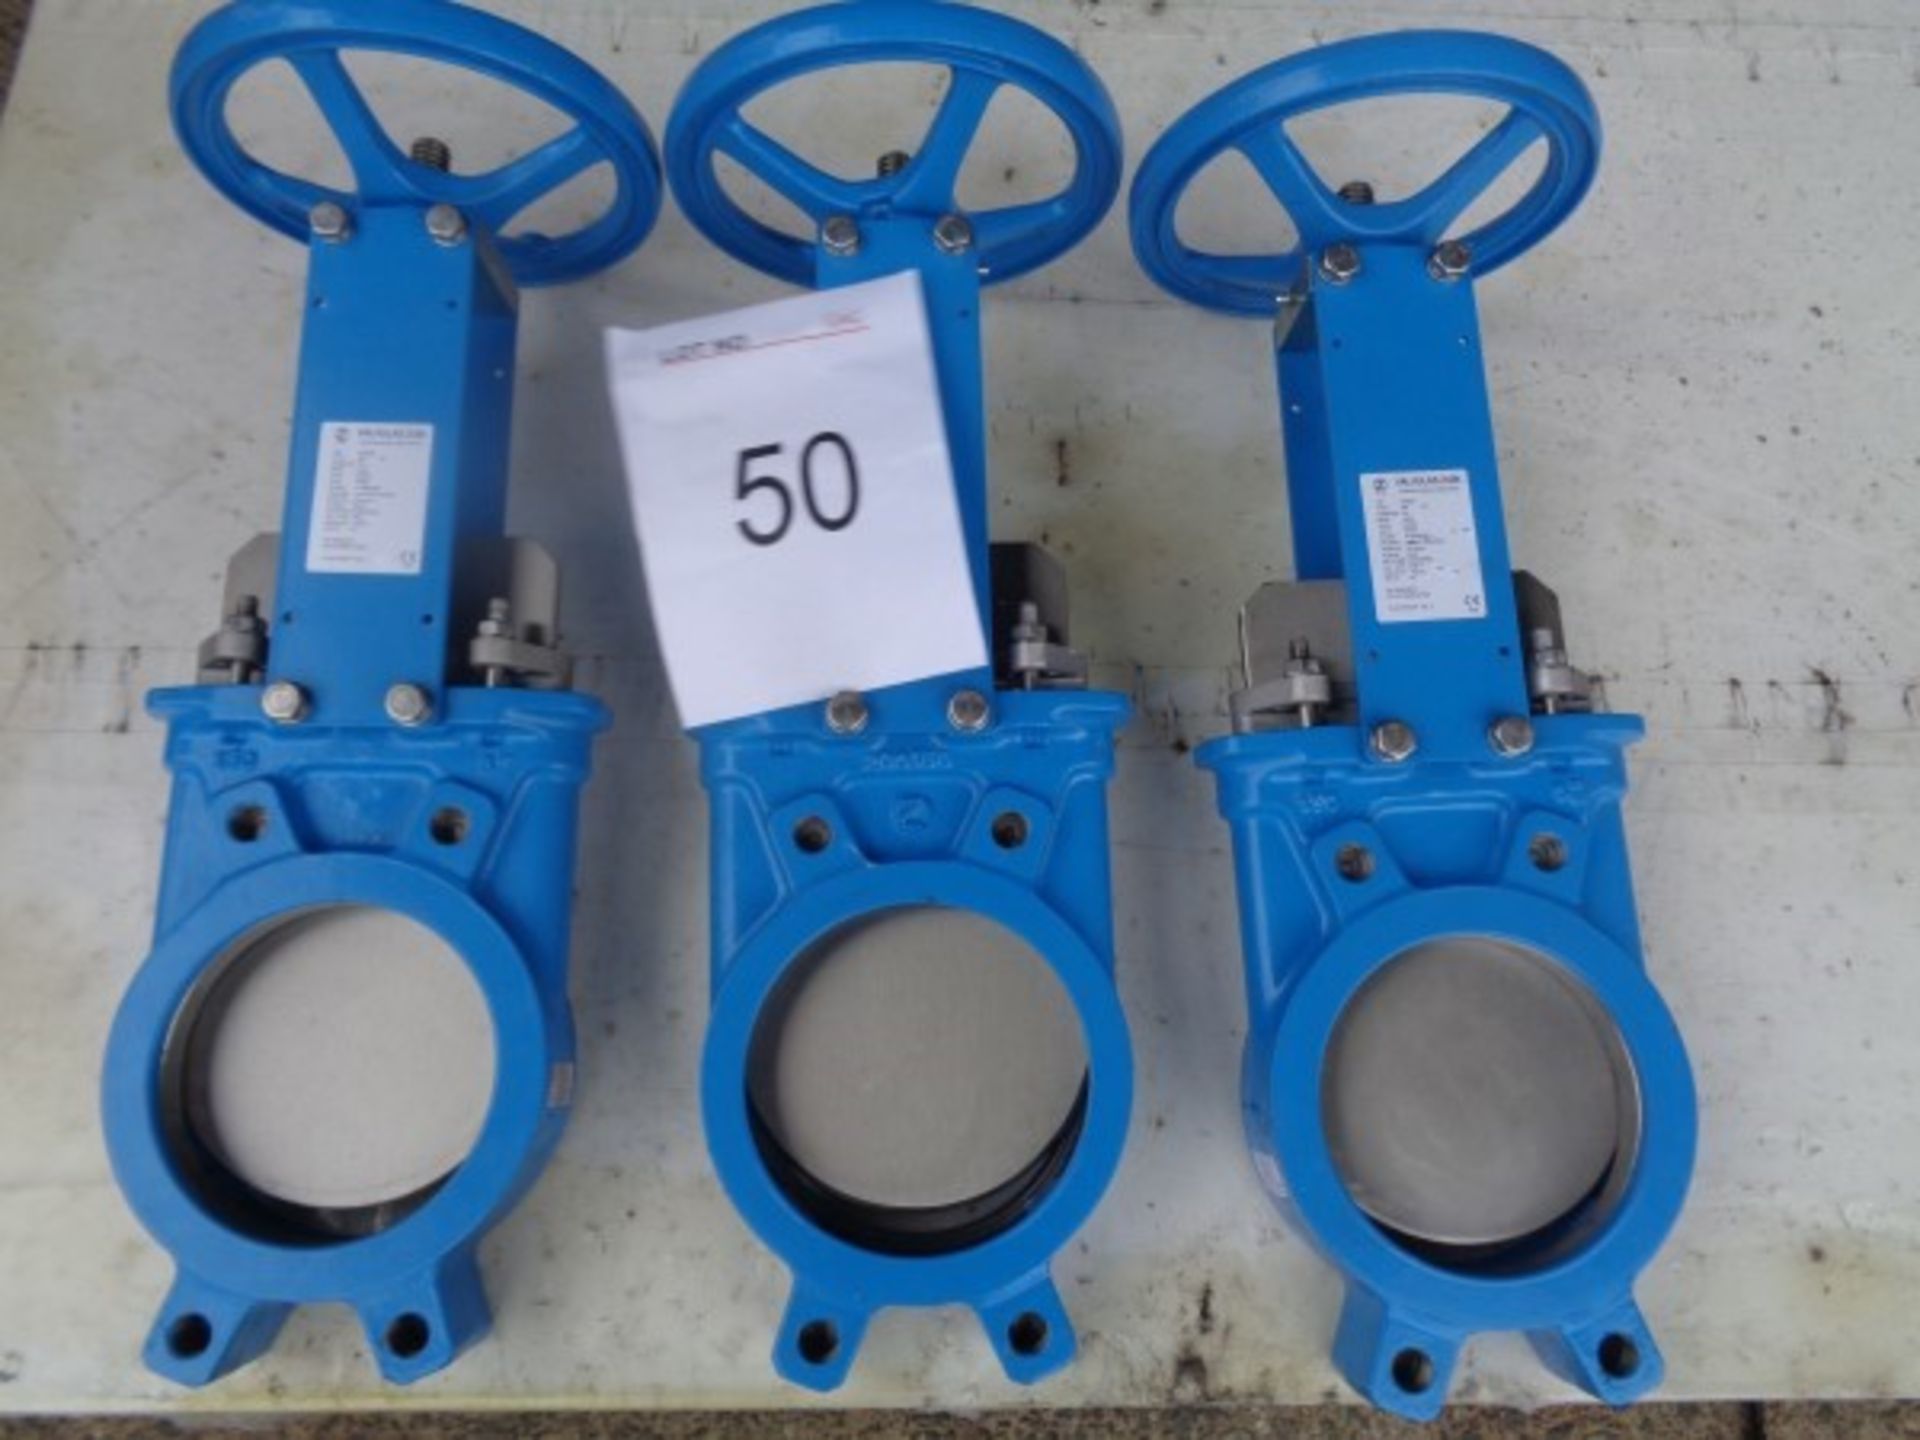 3 X Valvulas type 200 150mm gate valves